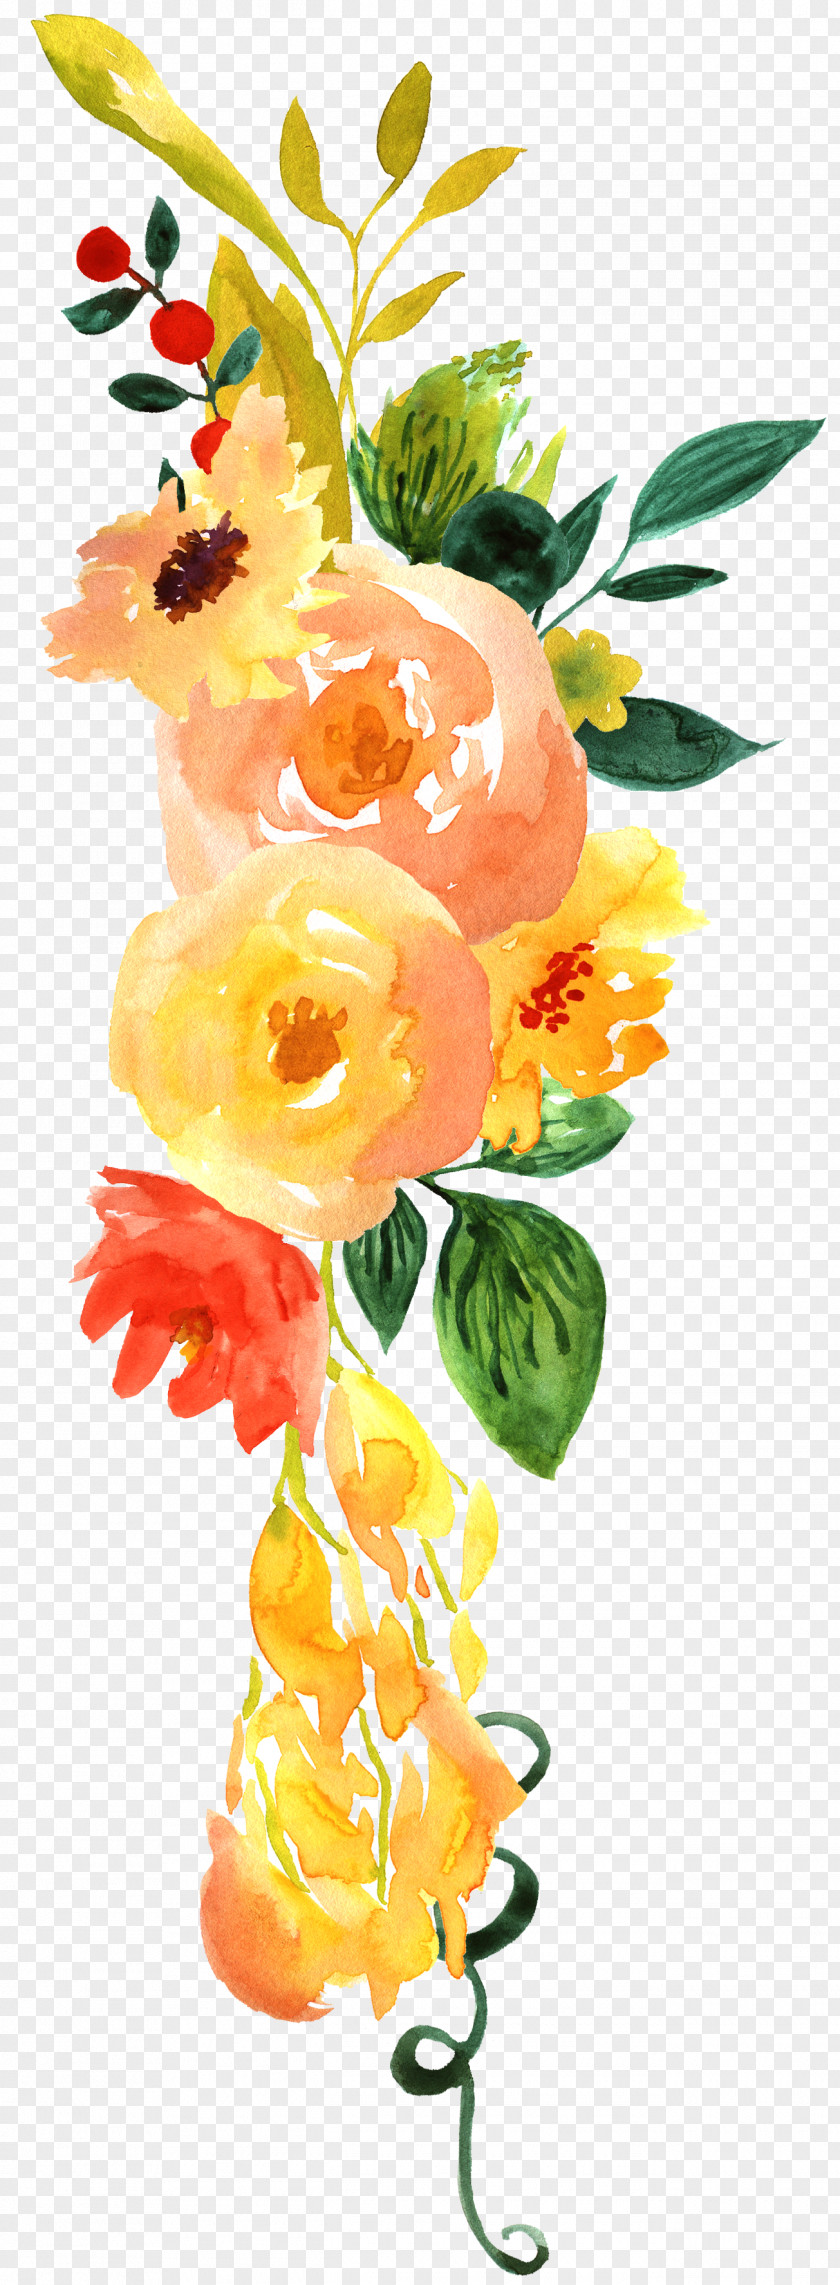 Carnations Cartoon Watercolor Painting Clip Art Image PNG